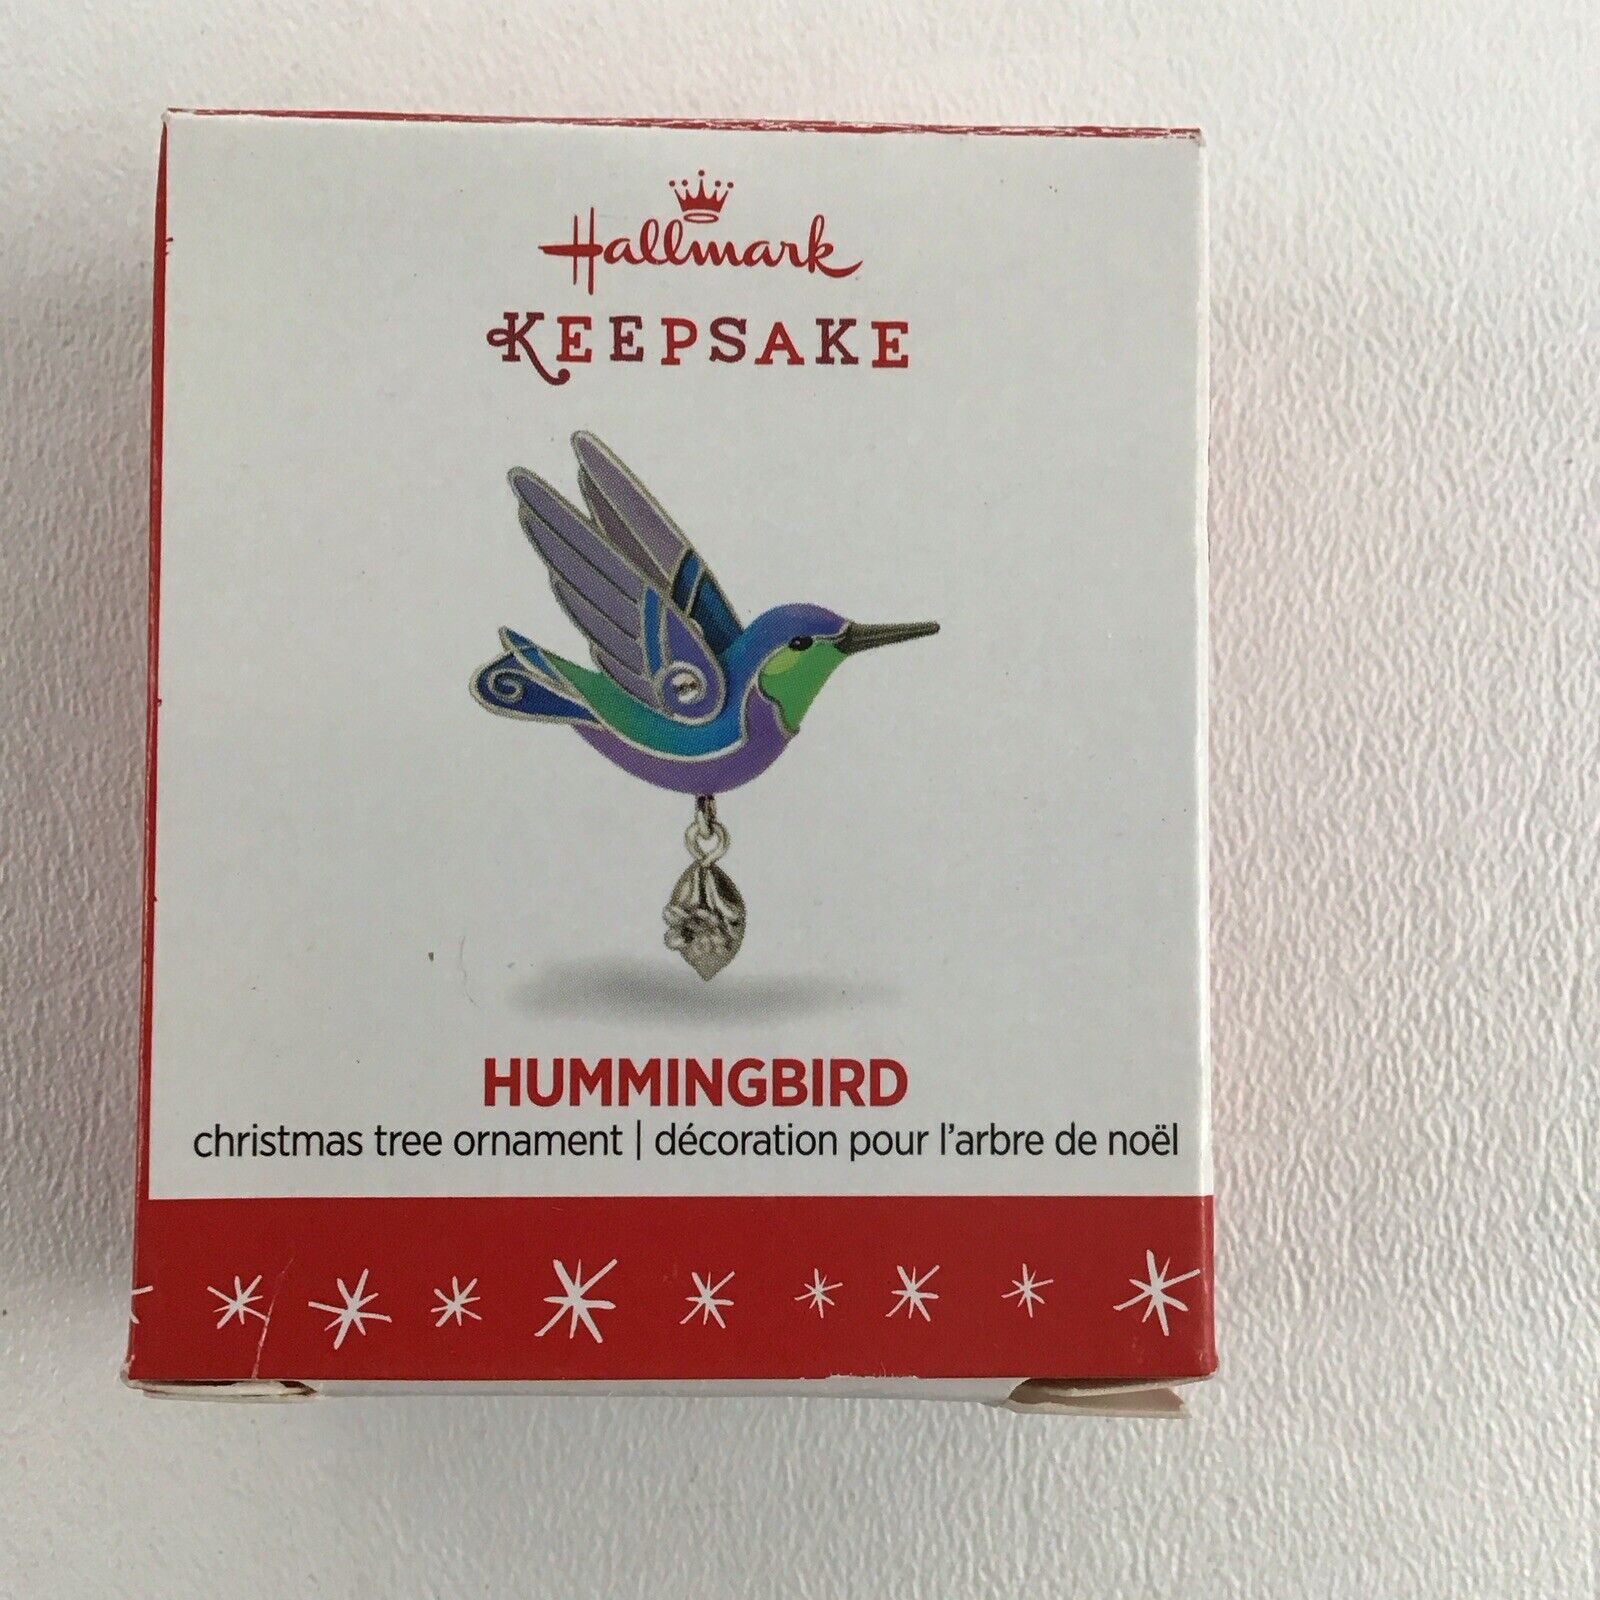 Hallmark Keepsake Christmas Ornament Beauty Of Birds Mini Hummingbird New 2016